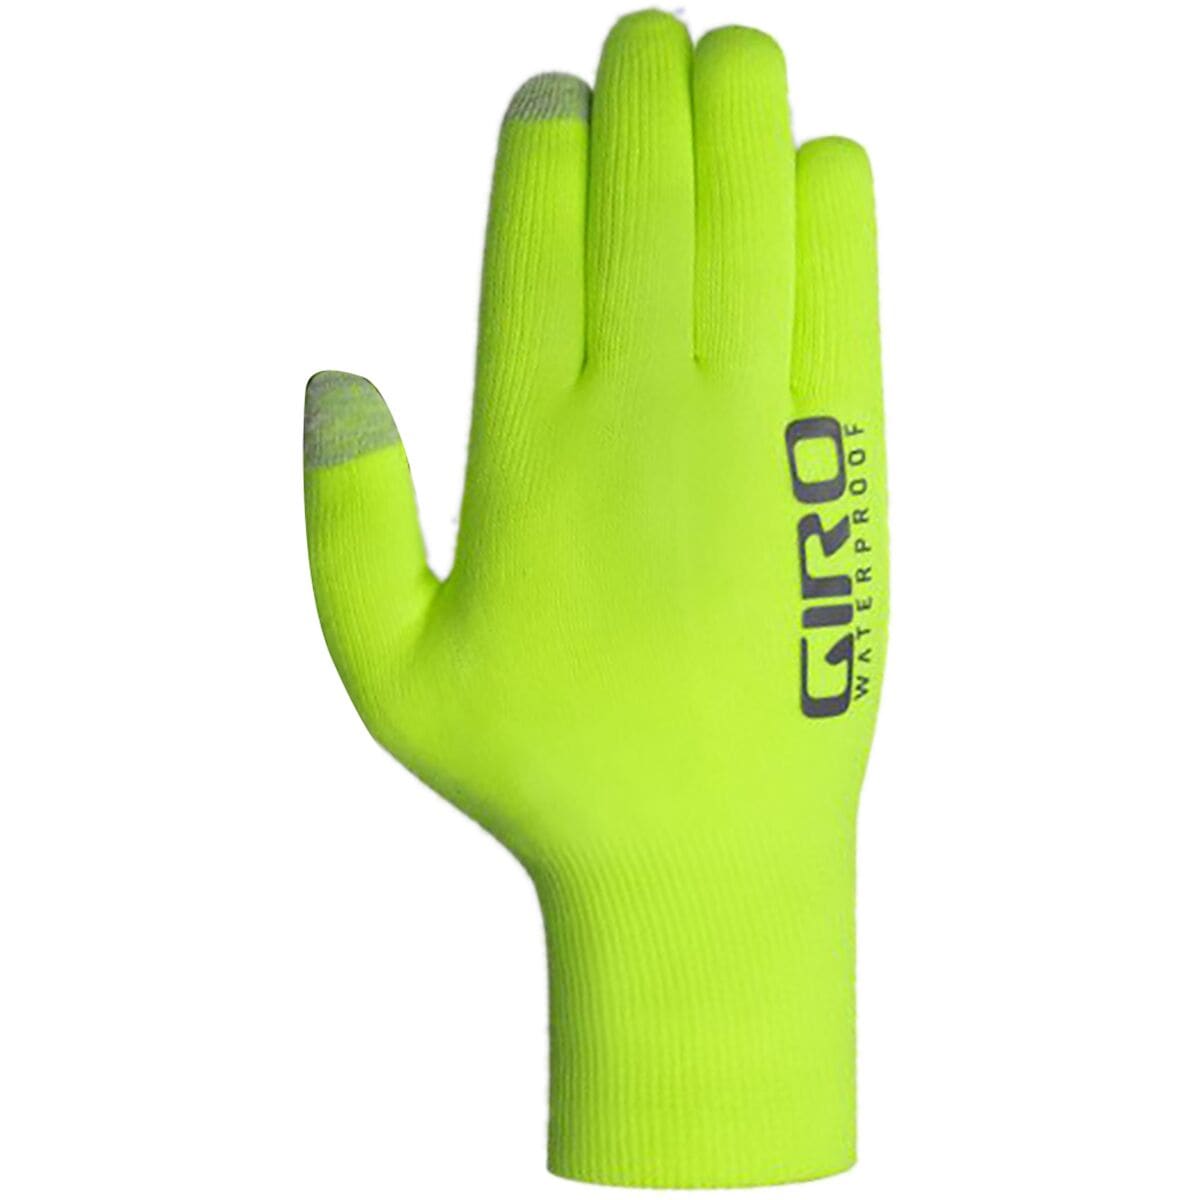 Giro Xnetic H2O Cycling Glove - Men's Highlight Yellow, M